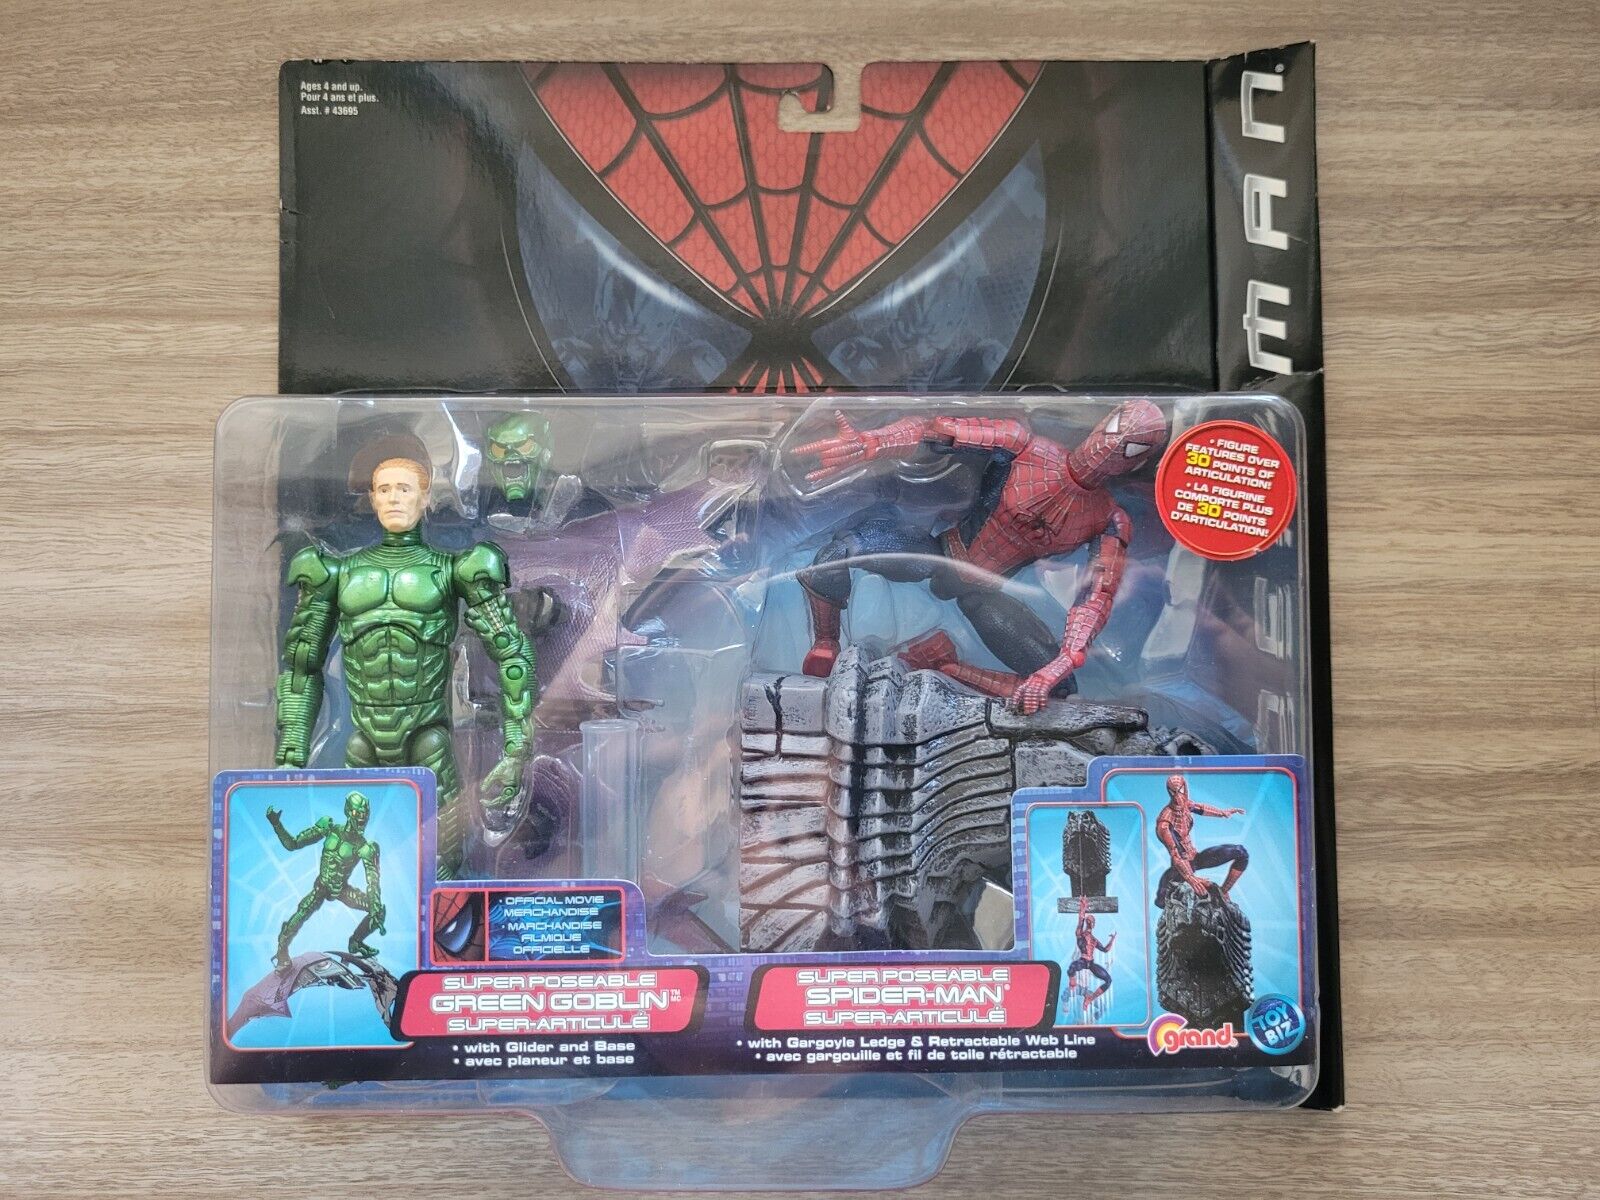 Toybiz Rare Spider-Man and Green Goblin two-pack figures; 2002 Raimi movie